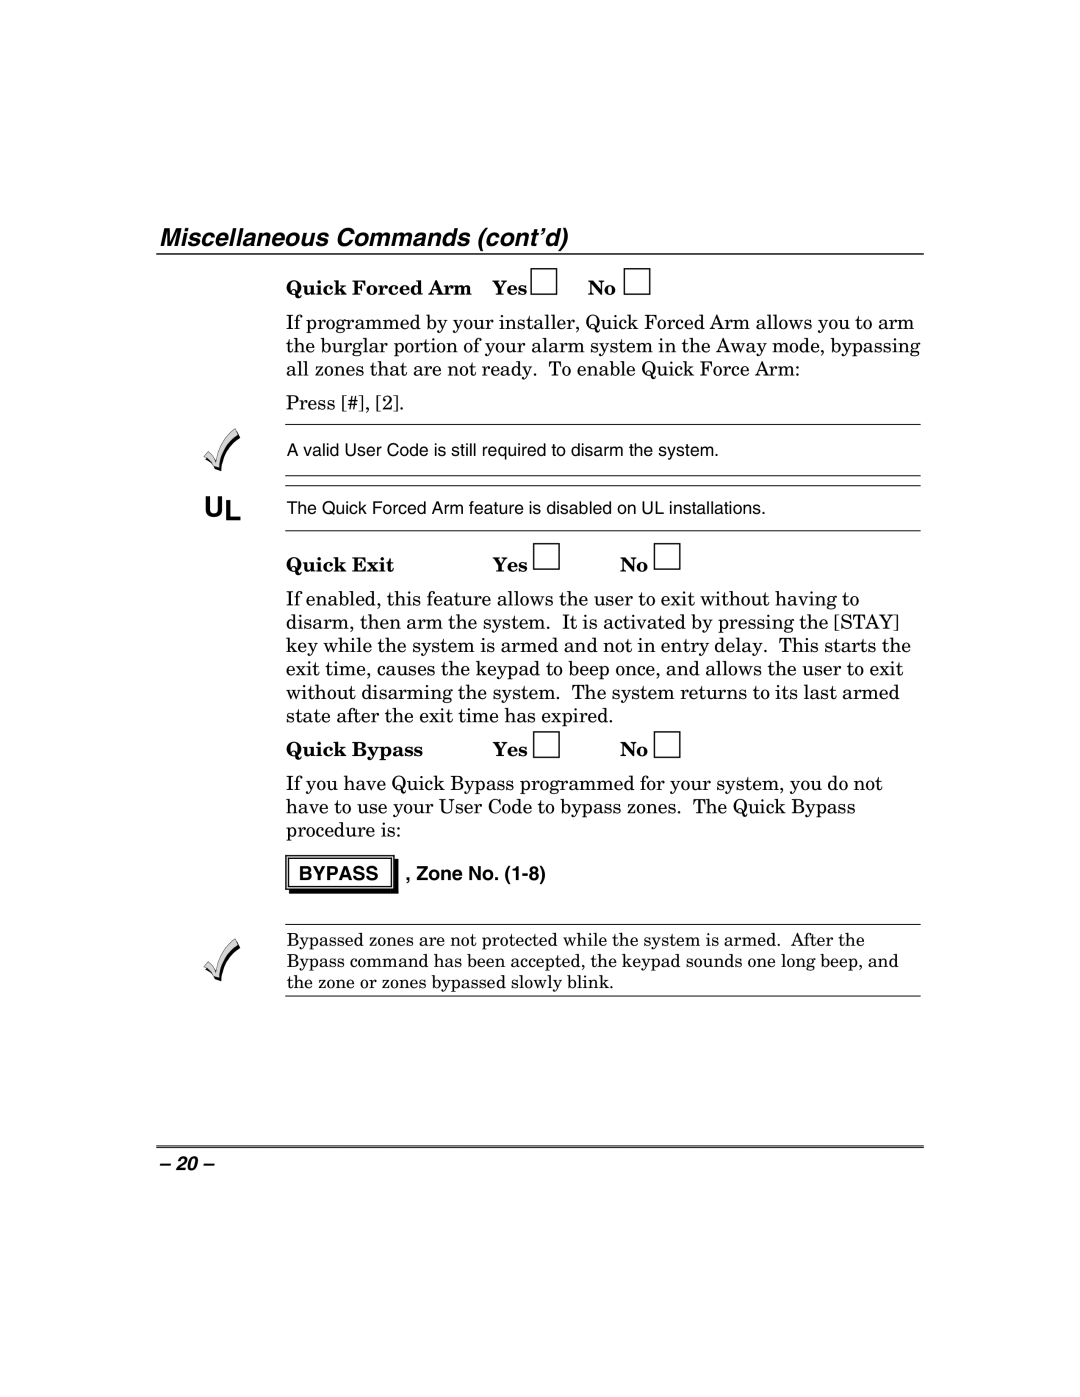 Honeywell 408EU manual Miscellaneous Commands cont’d, Bypass , Zone No 